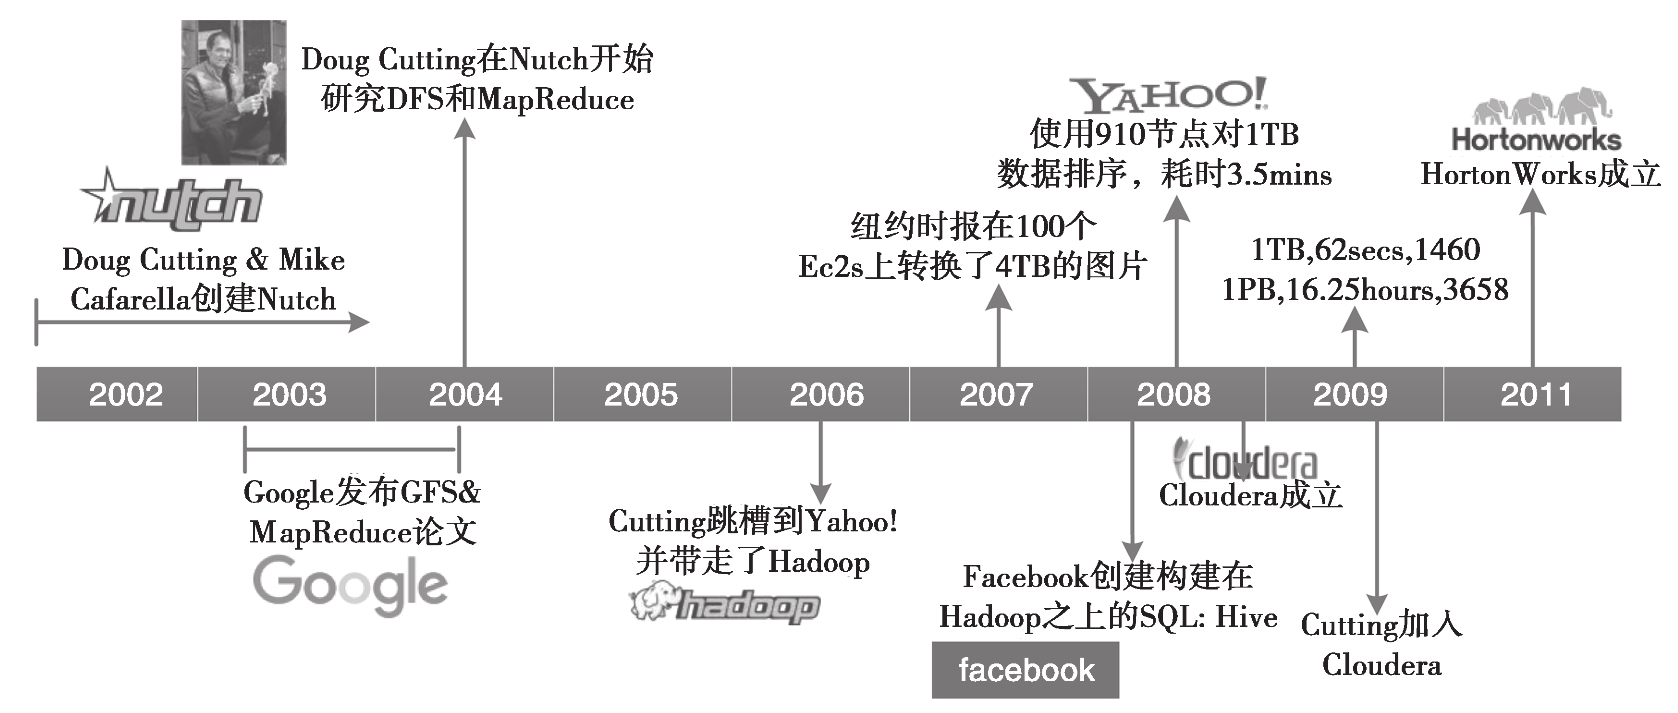 图1-1 Hadoop发展历史